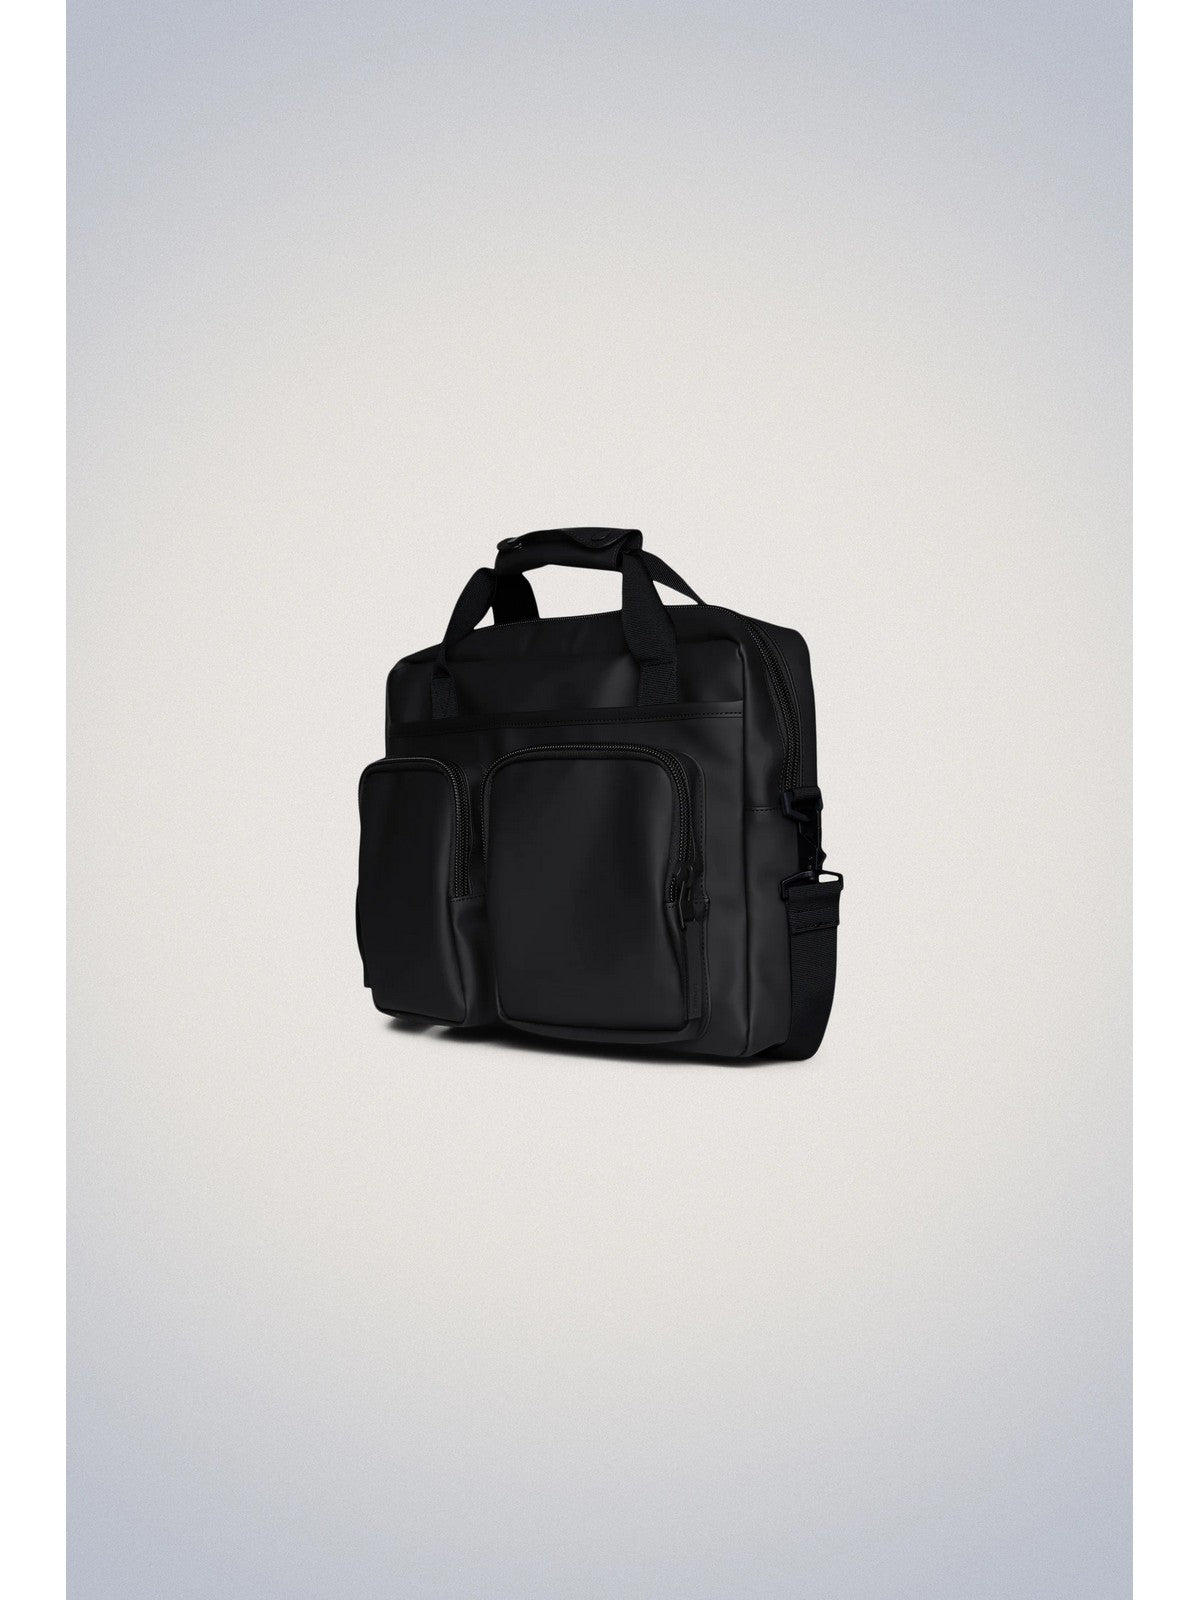 RAINS Borsa Unisex adulto Texel Tech Bag W3 14250 01 Black Nero